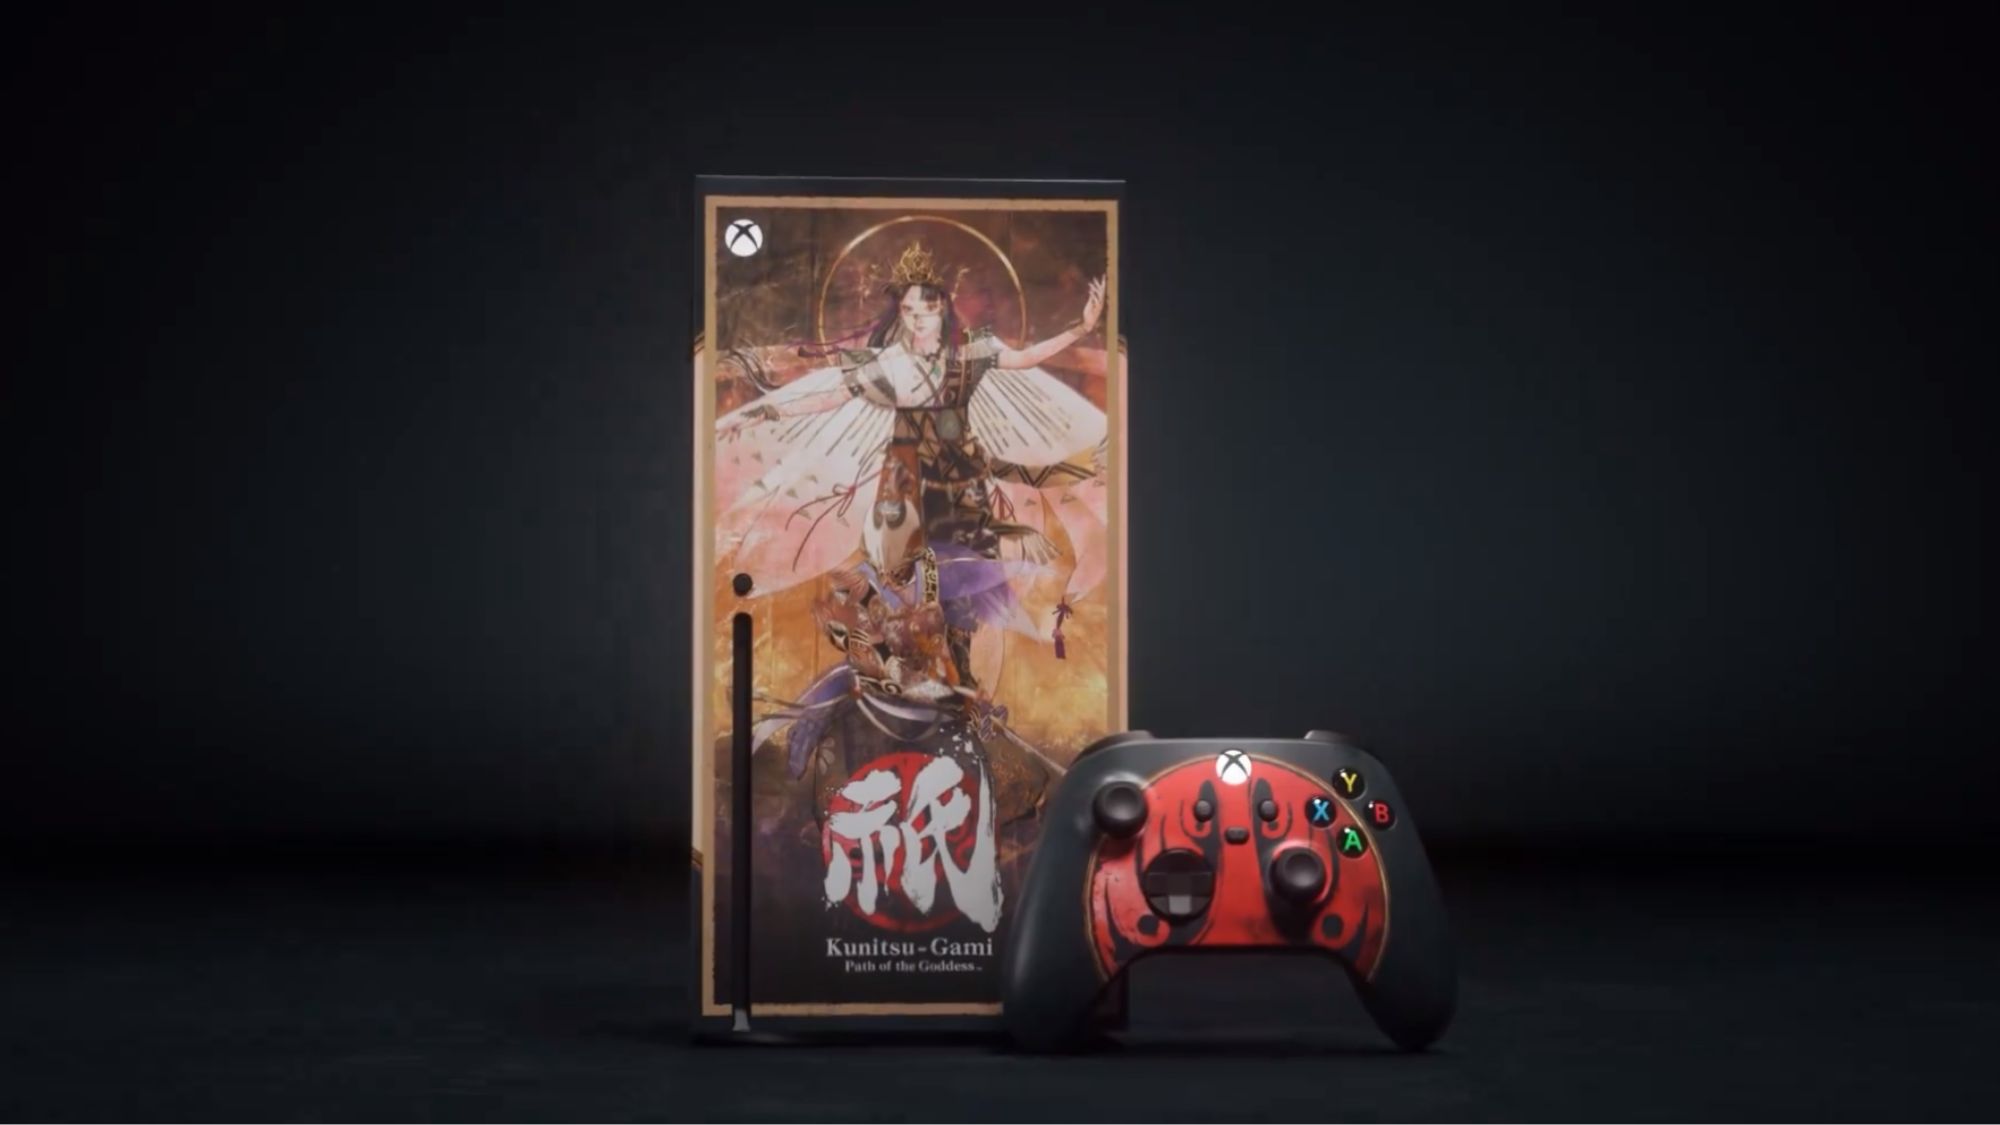 Microsoft is giving away a custom Kunitsu-Gami: Path of the Goddess Xbox Series X bundle